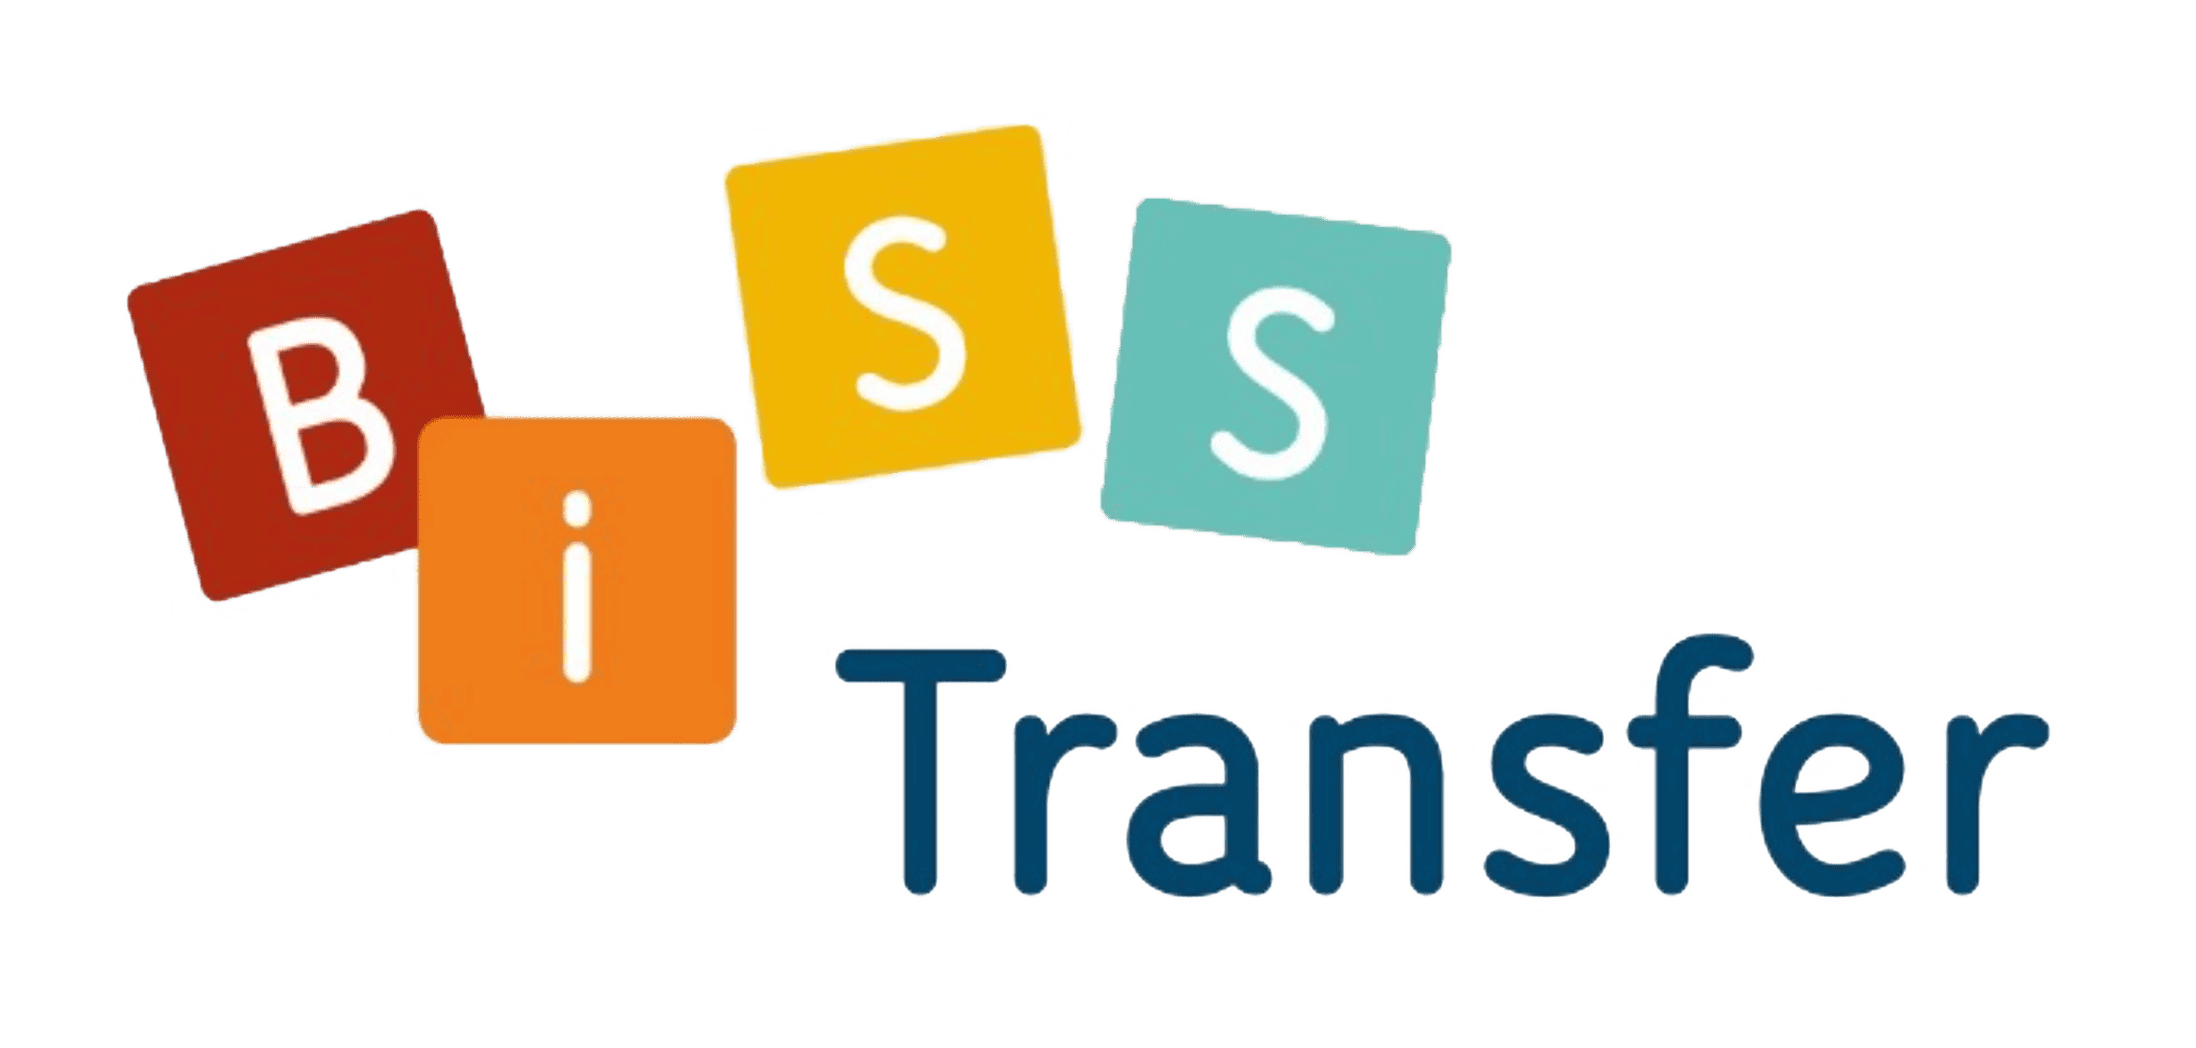 Logo BiSS Transfer